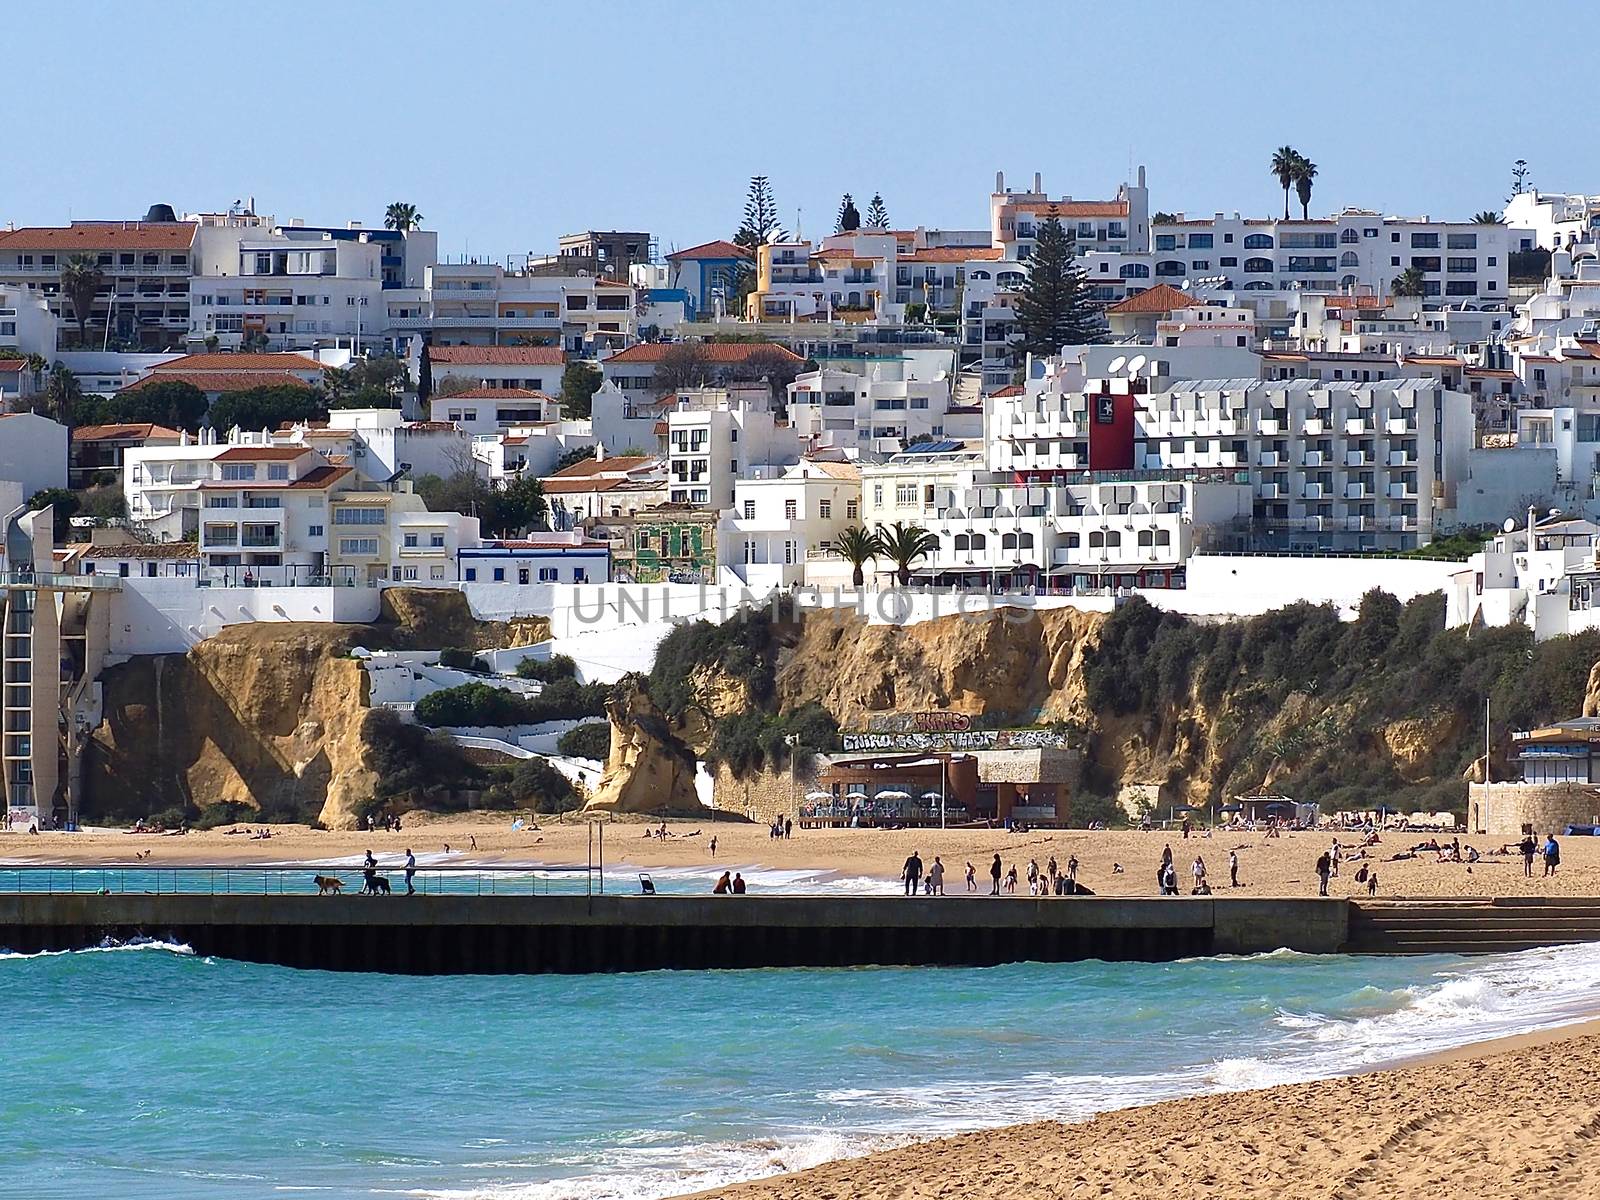 Beautiful cityscape of Albufeira at the Algarve coast of Portugal